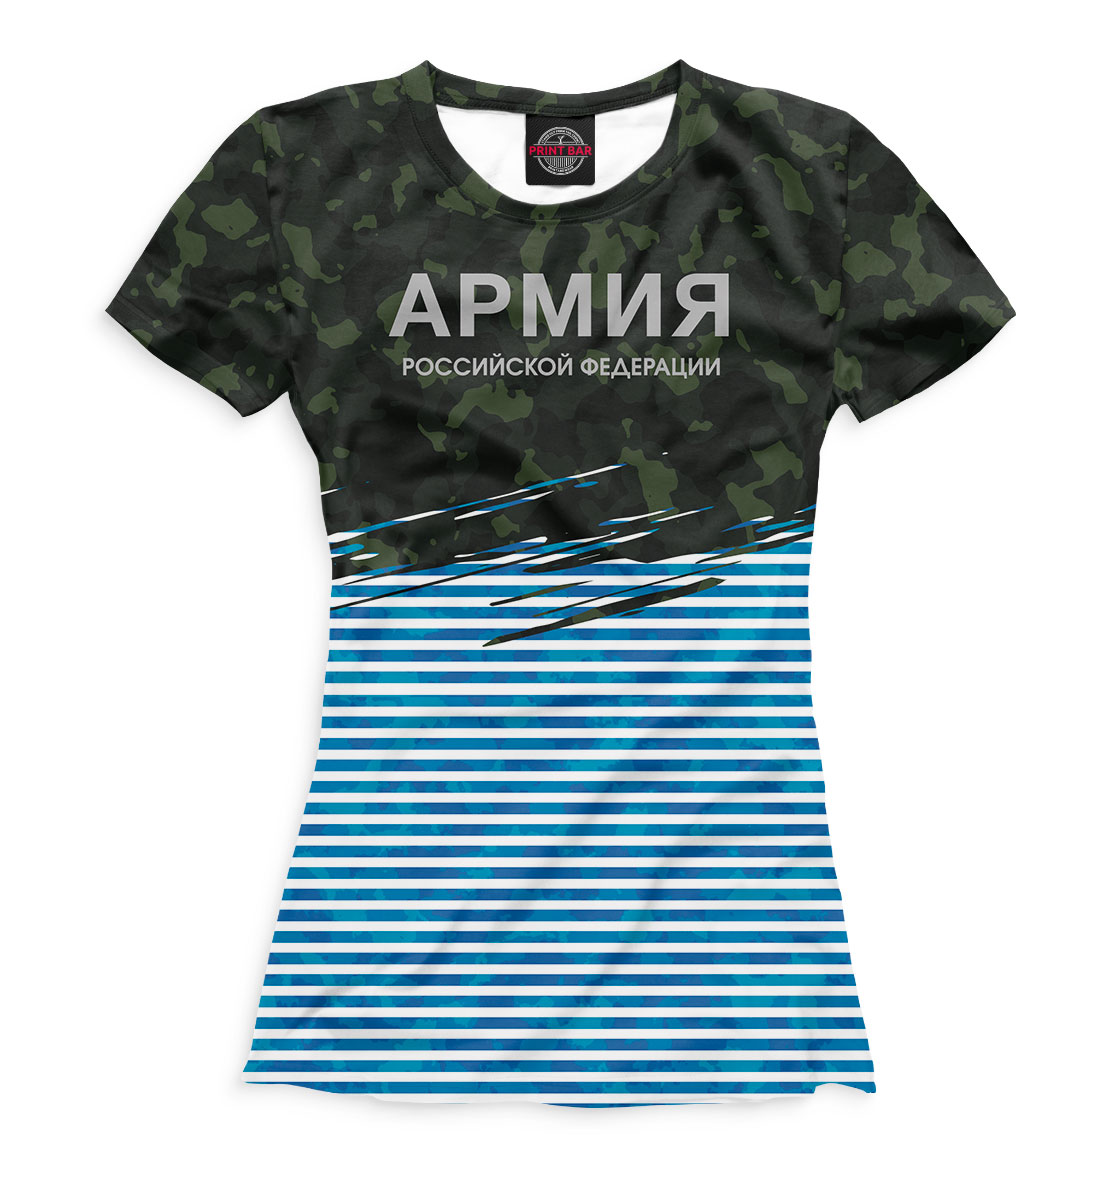 Футболка Армия Российской Федерации для женщин, артикул: VST-684255-fut-1mp